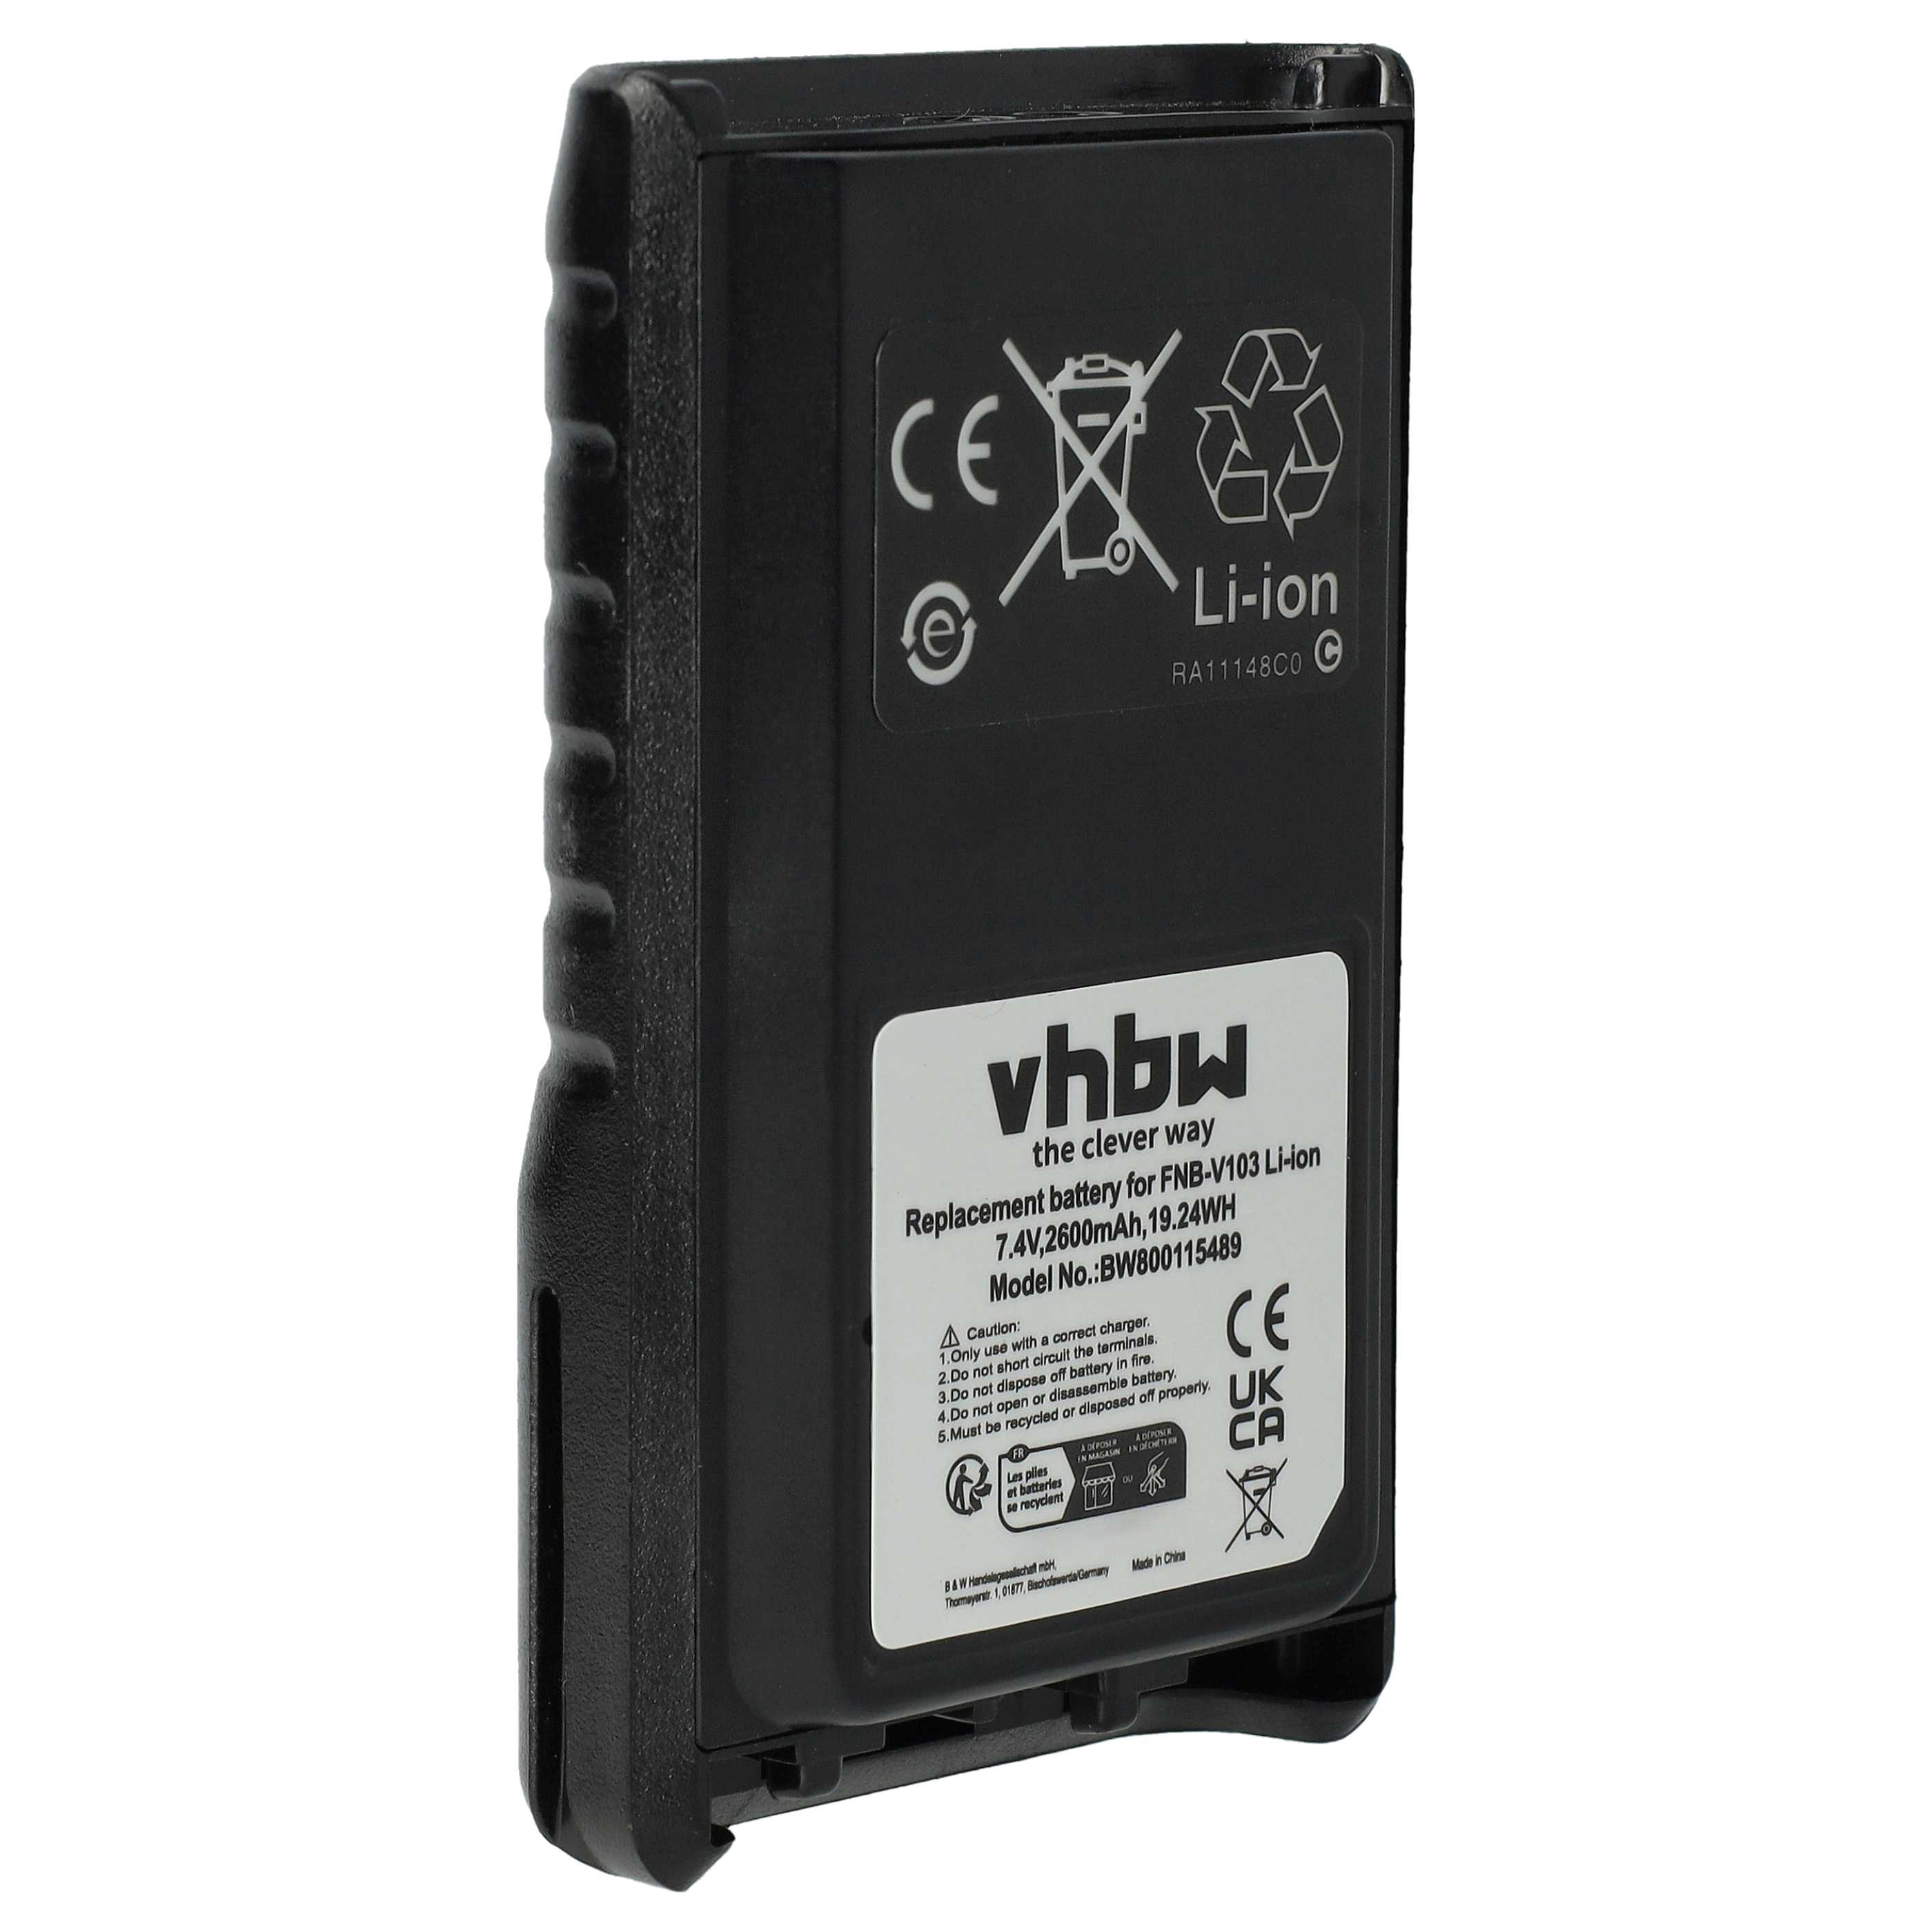 Batteria per dispositivo radio sostituisce Yaesu / Vertex FNB-V103 Vertex / Yaesu - 2600mAh 7,4V Li-Ion